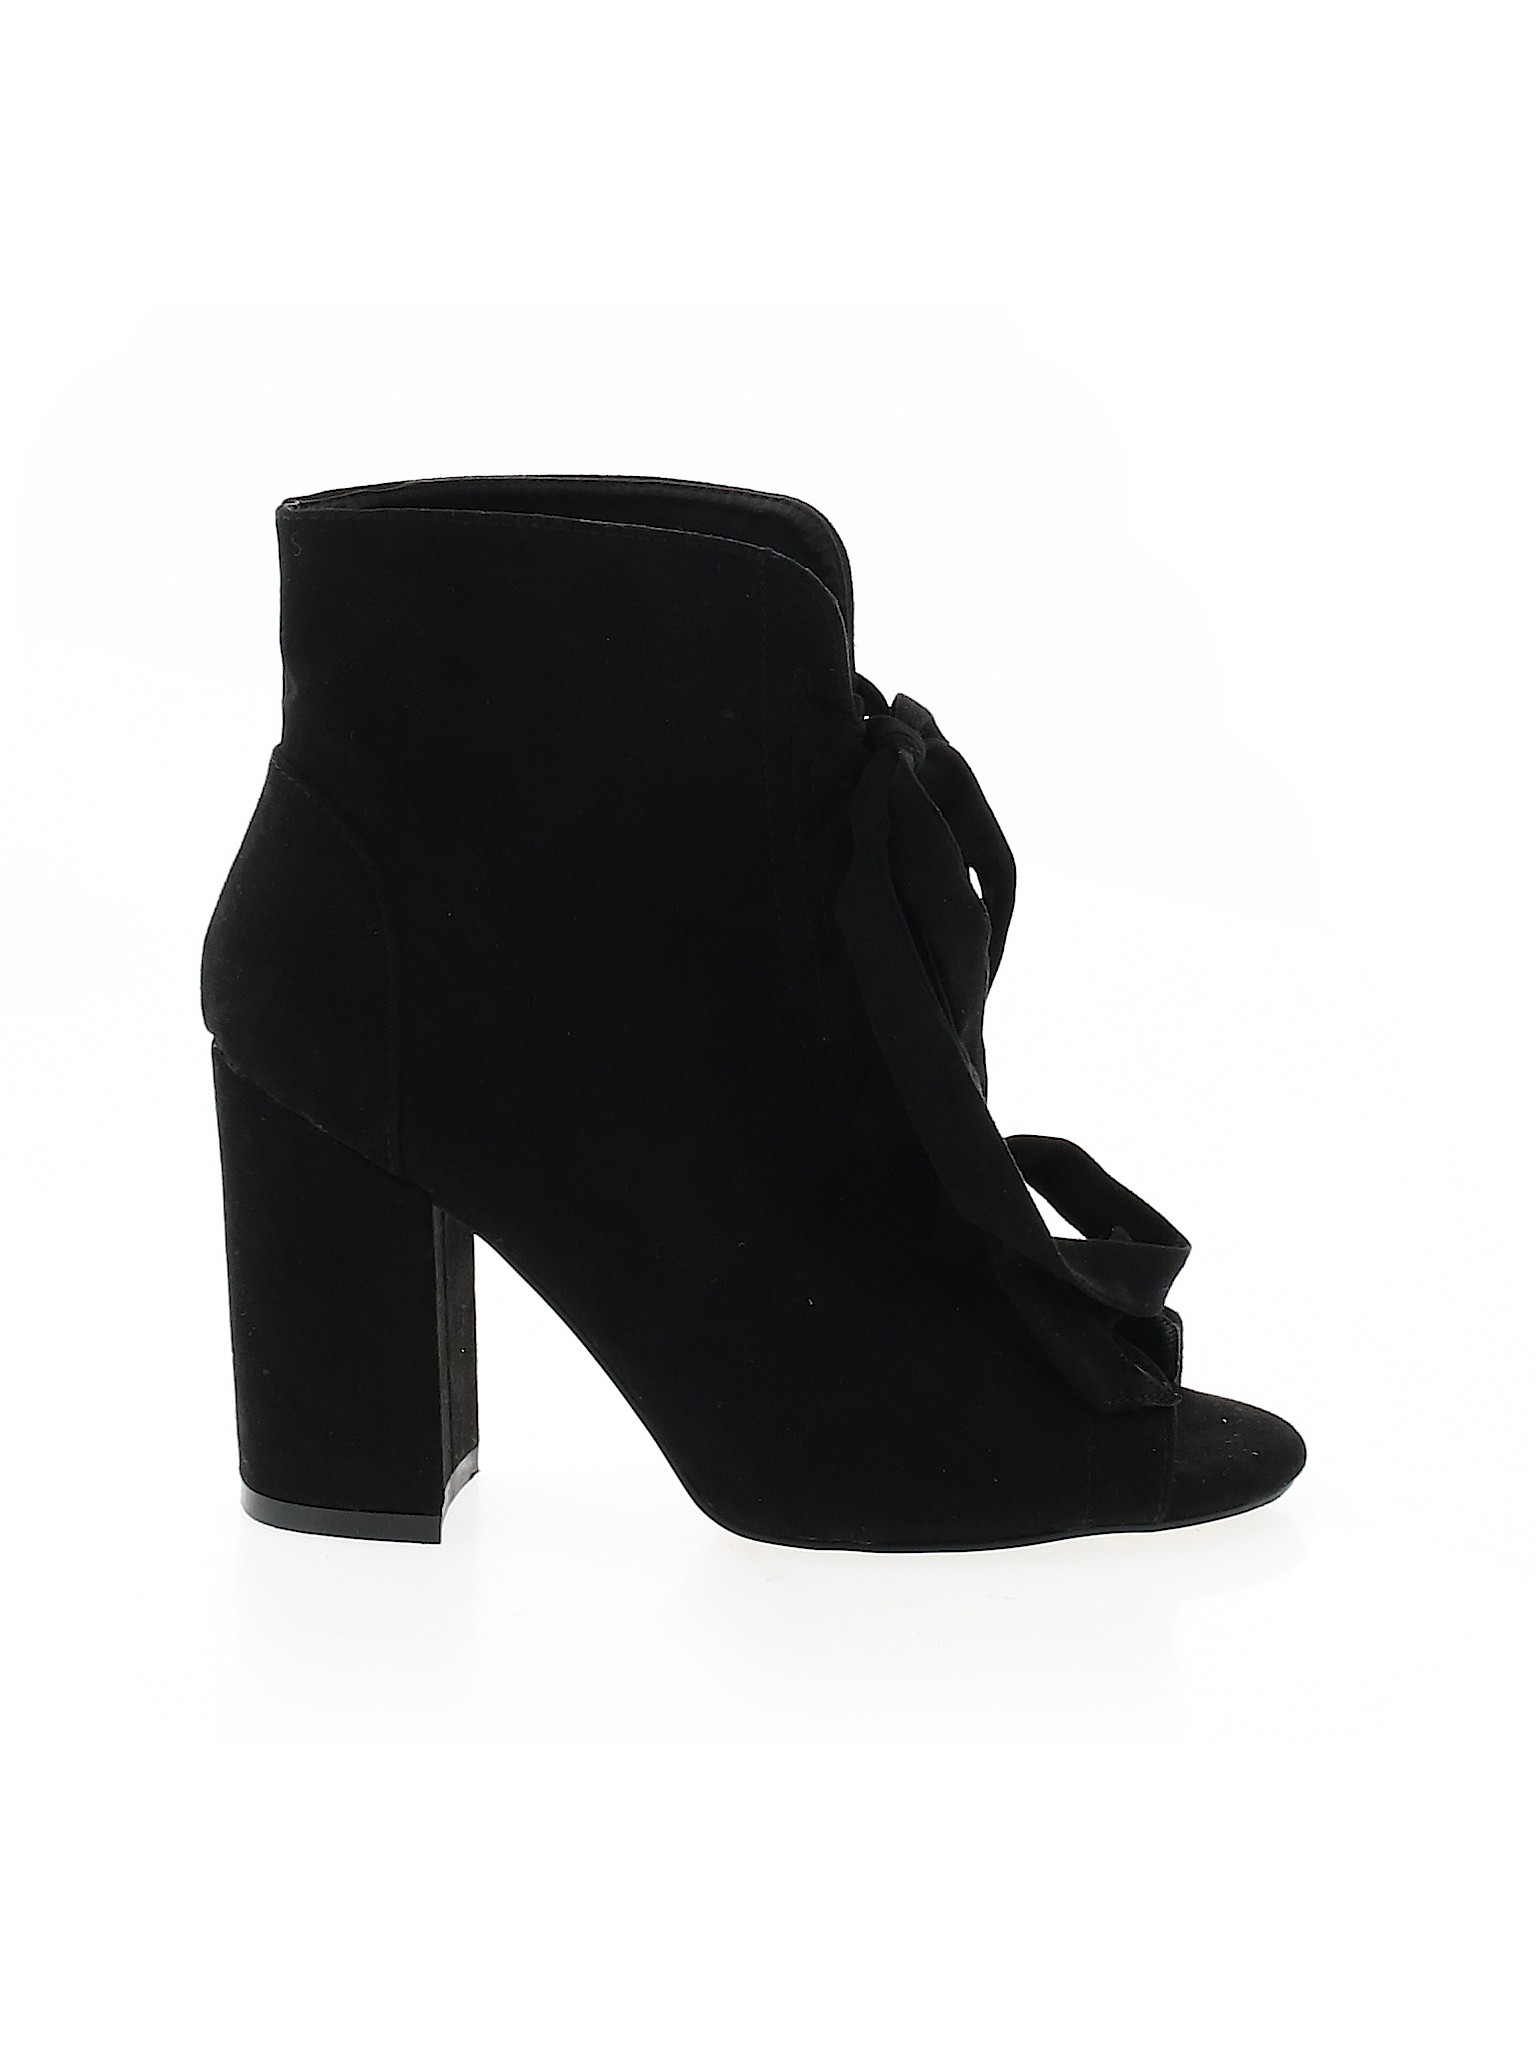 justfab black heels